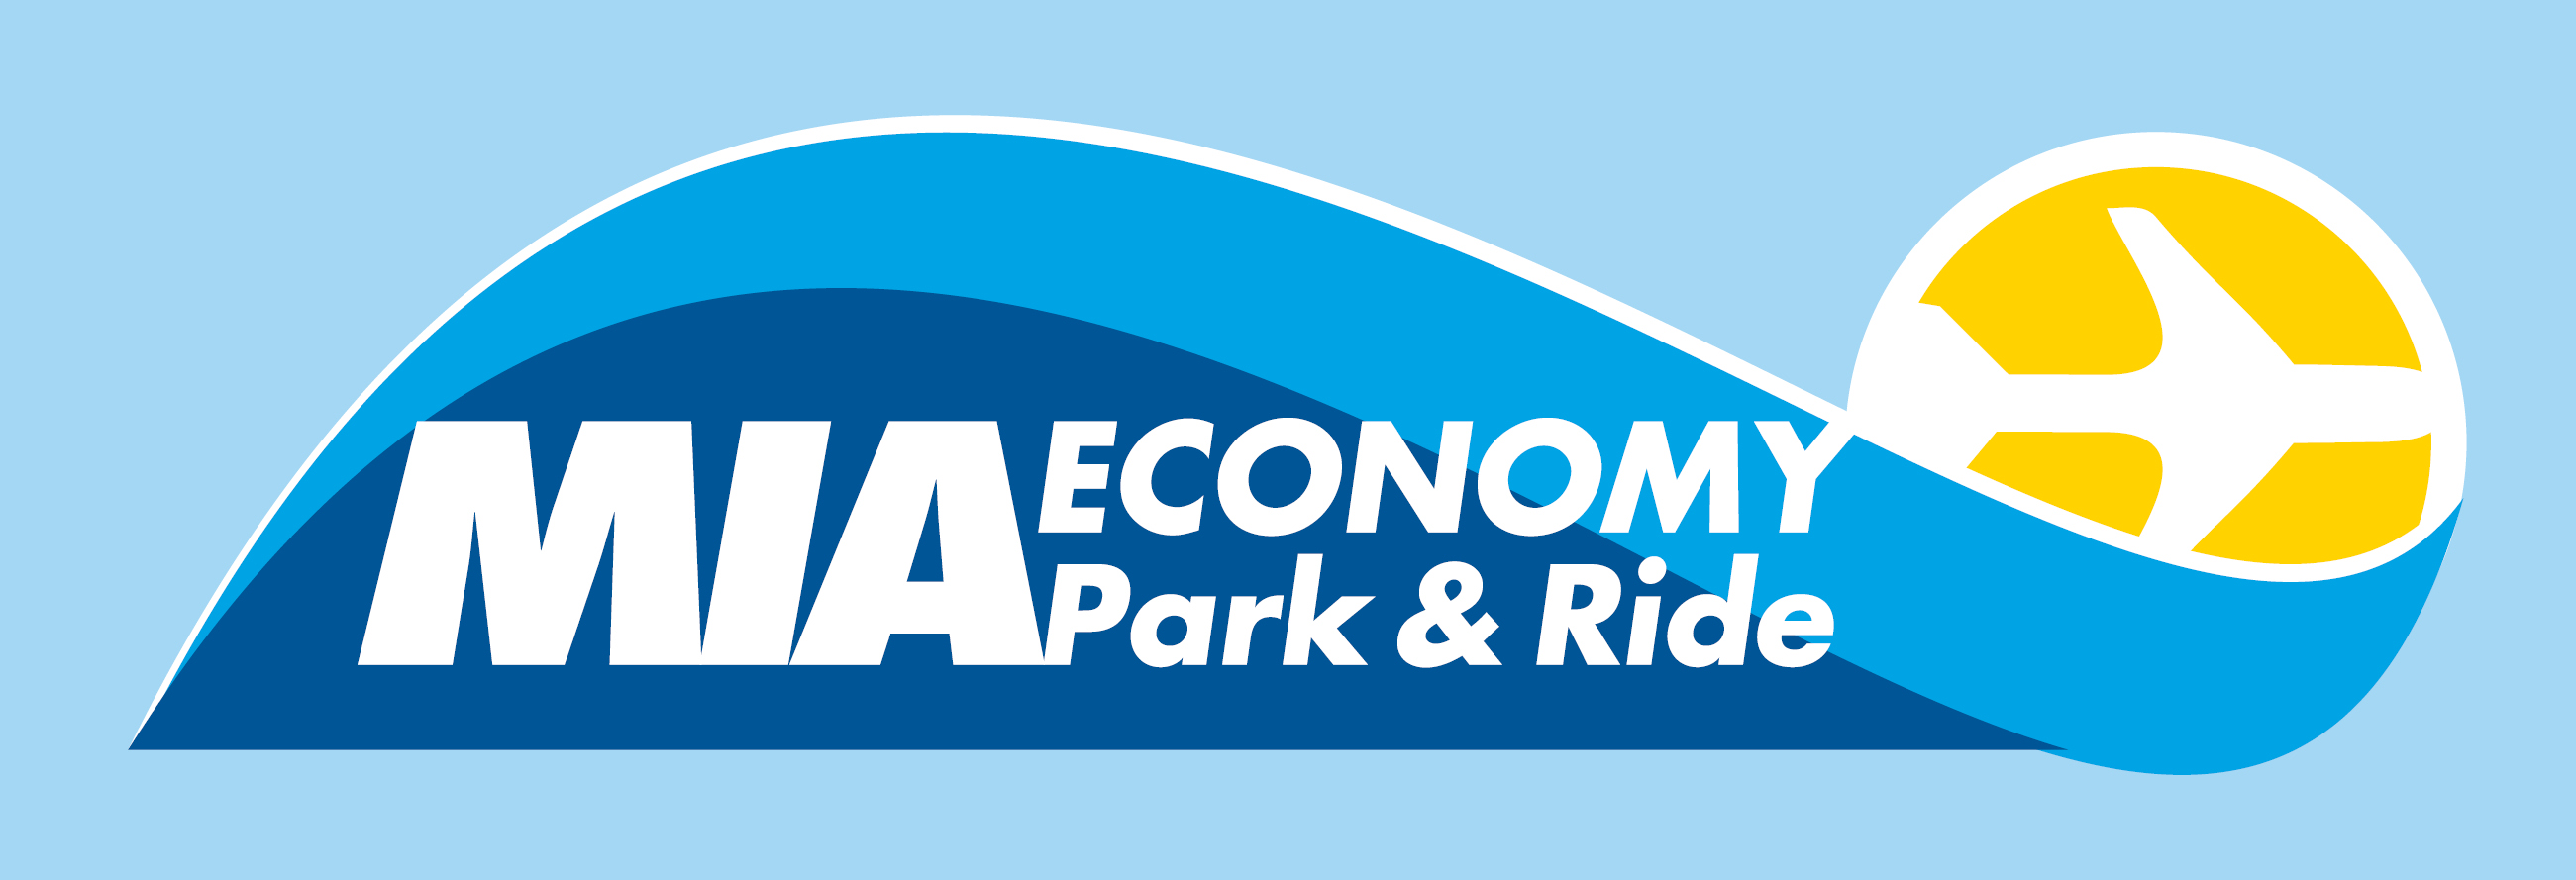 MIA Economy Park & Ride logo